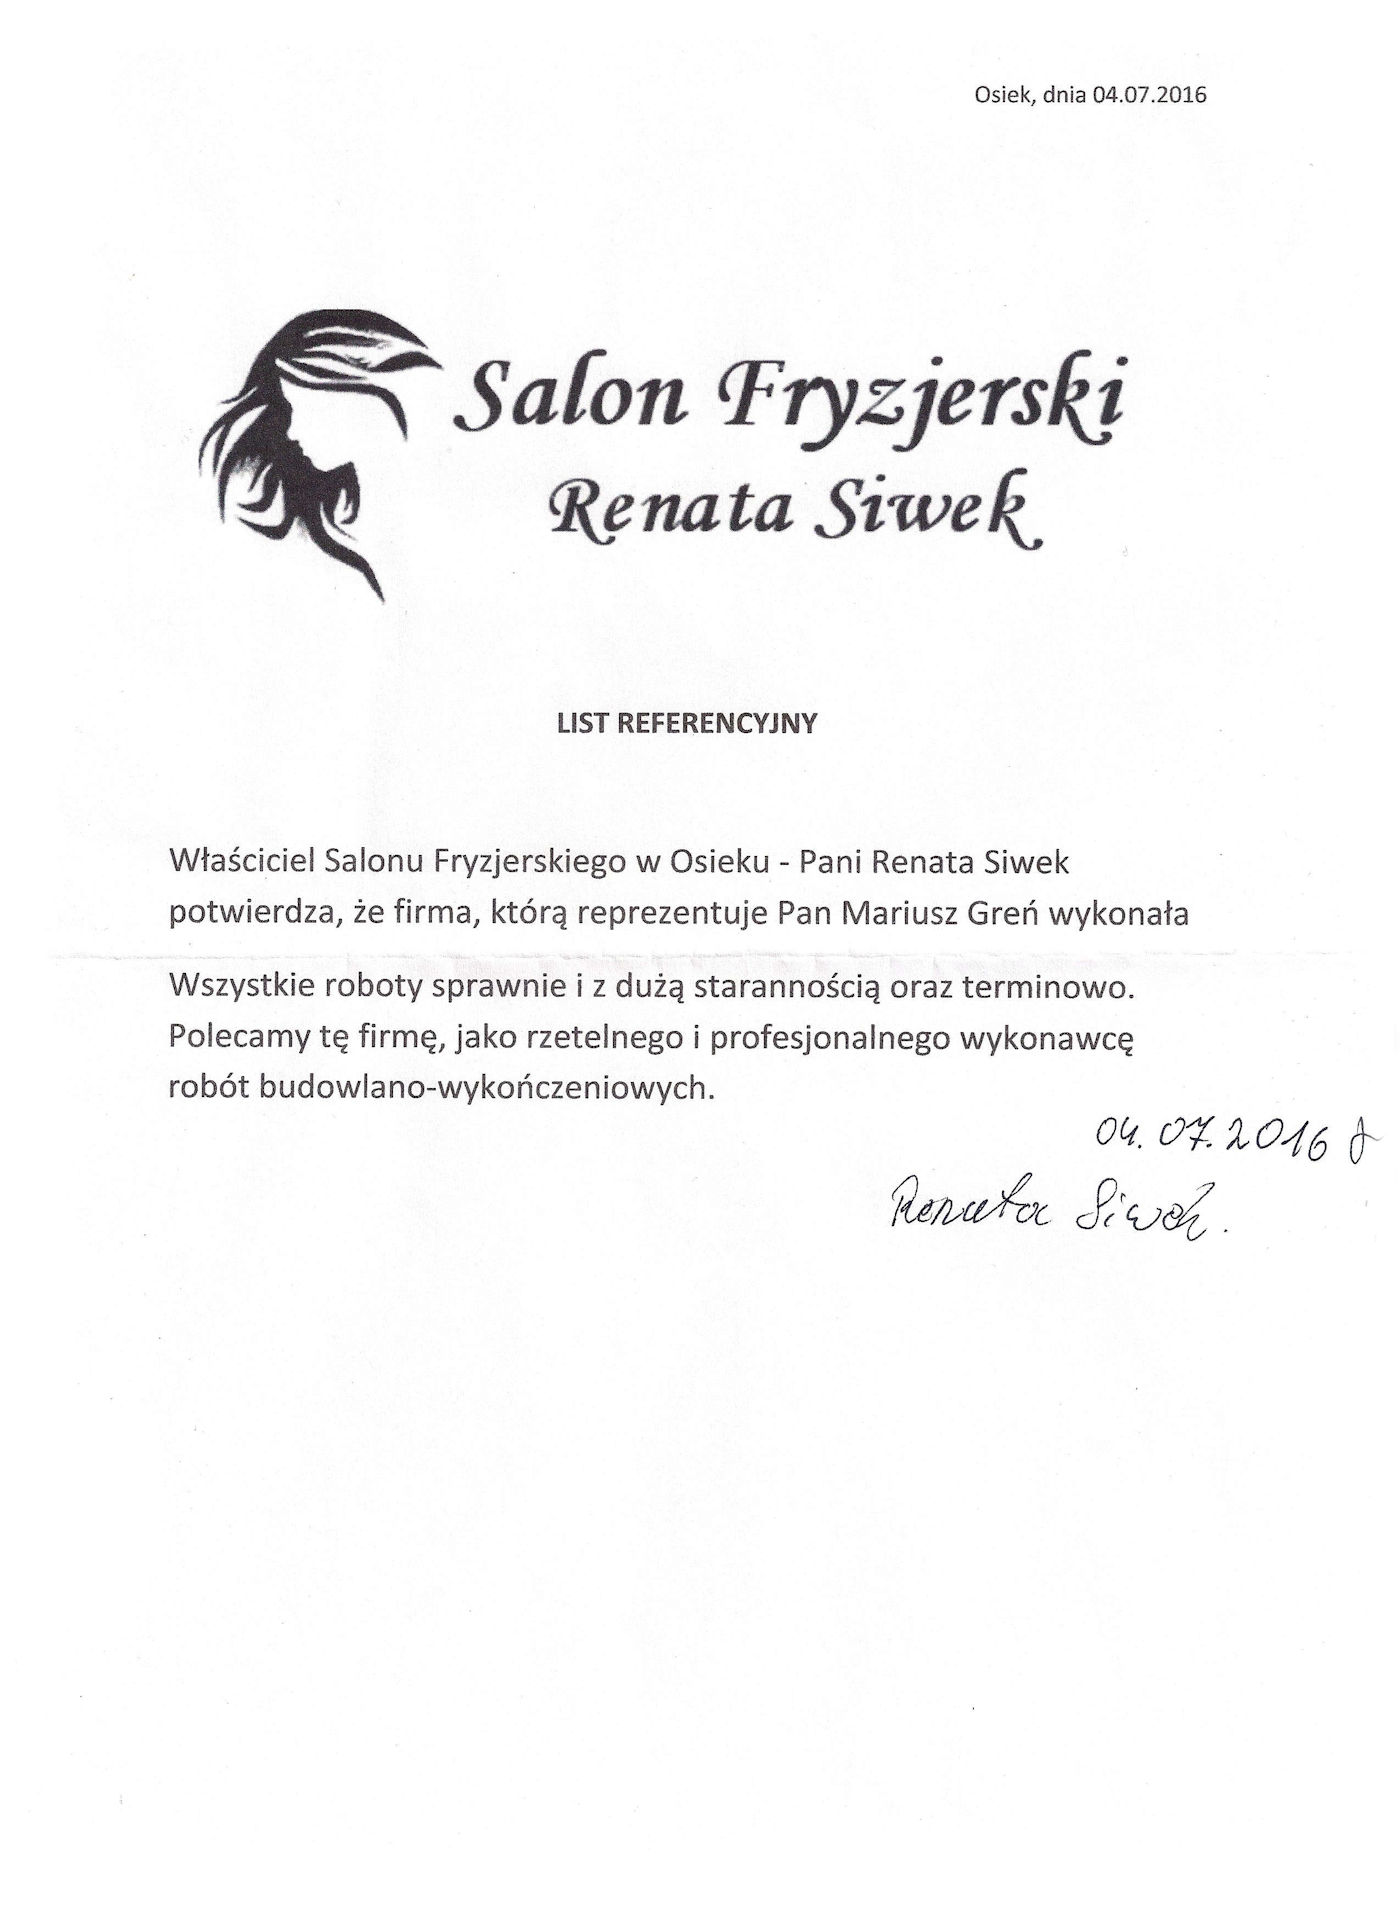 Salon Fryzjerski - Renata Siwek, Osiek